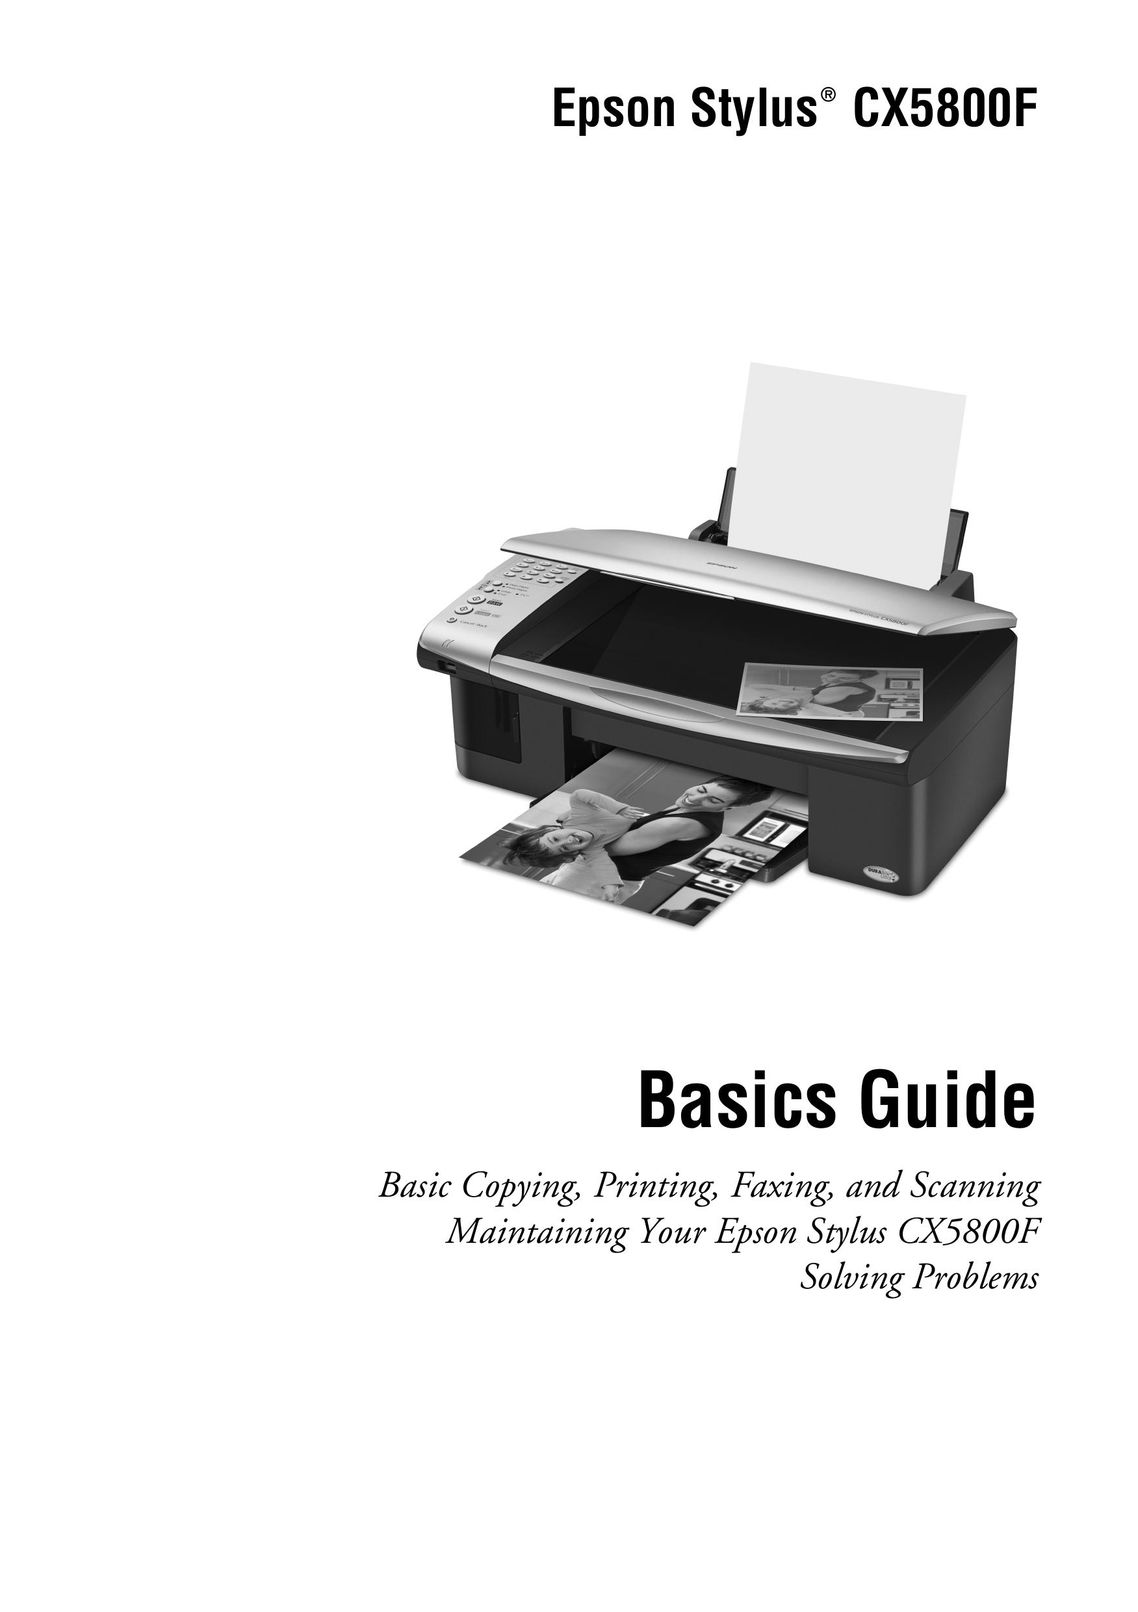 Garmin CX5800F All in One Printer User Manual